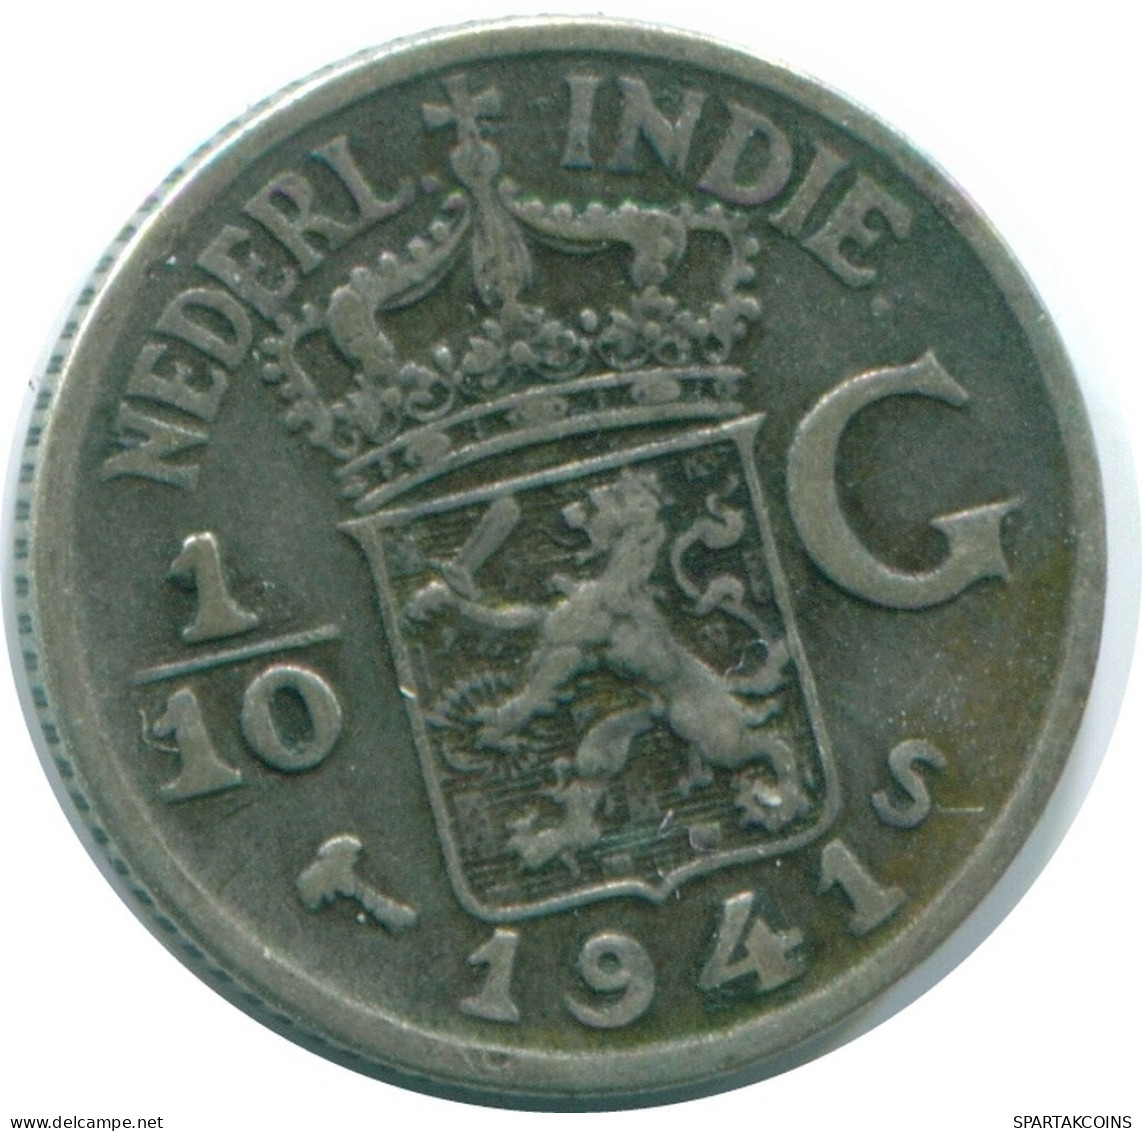 1/10 GULDEN 1941 S INDIAS ORIENTALES DE LOS PAÍSES BAJOS PLATA #NL13807.3.E.A - Dutch East Indies